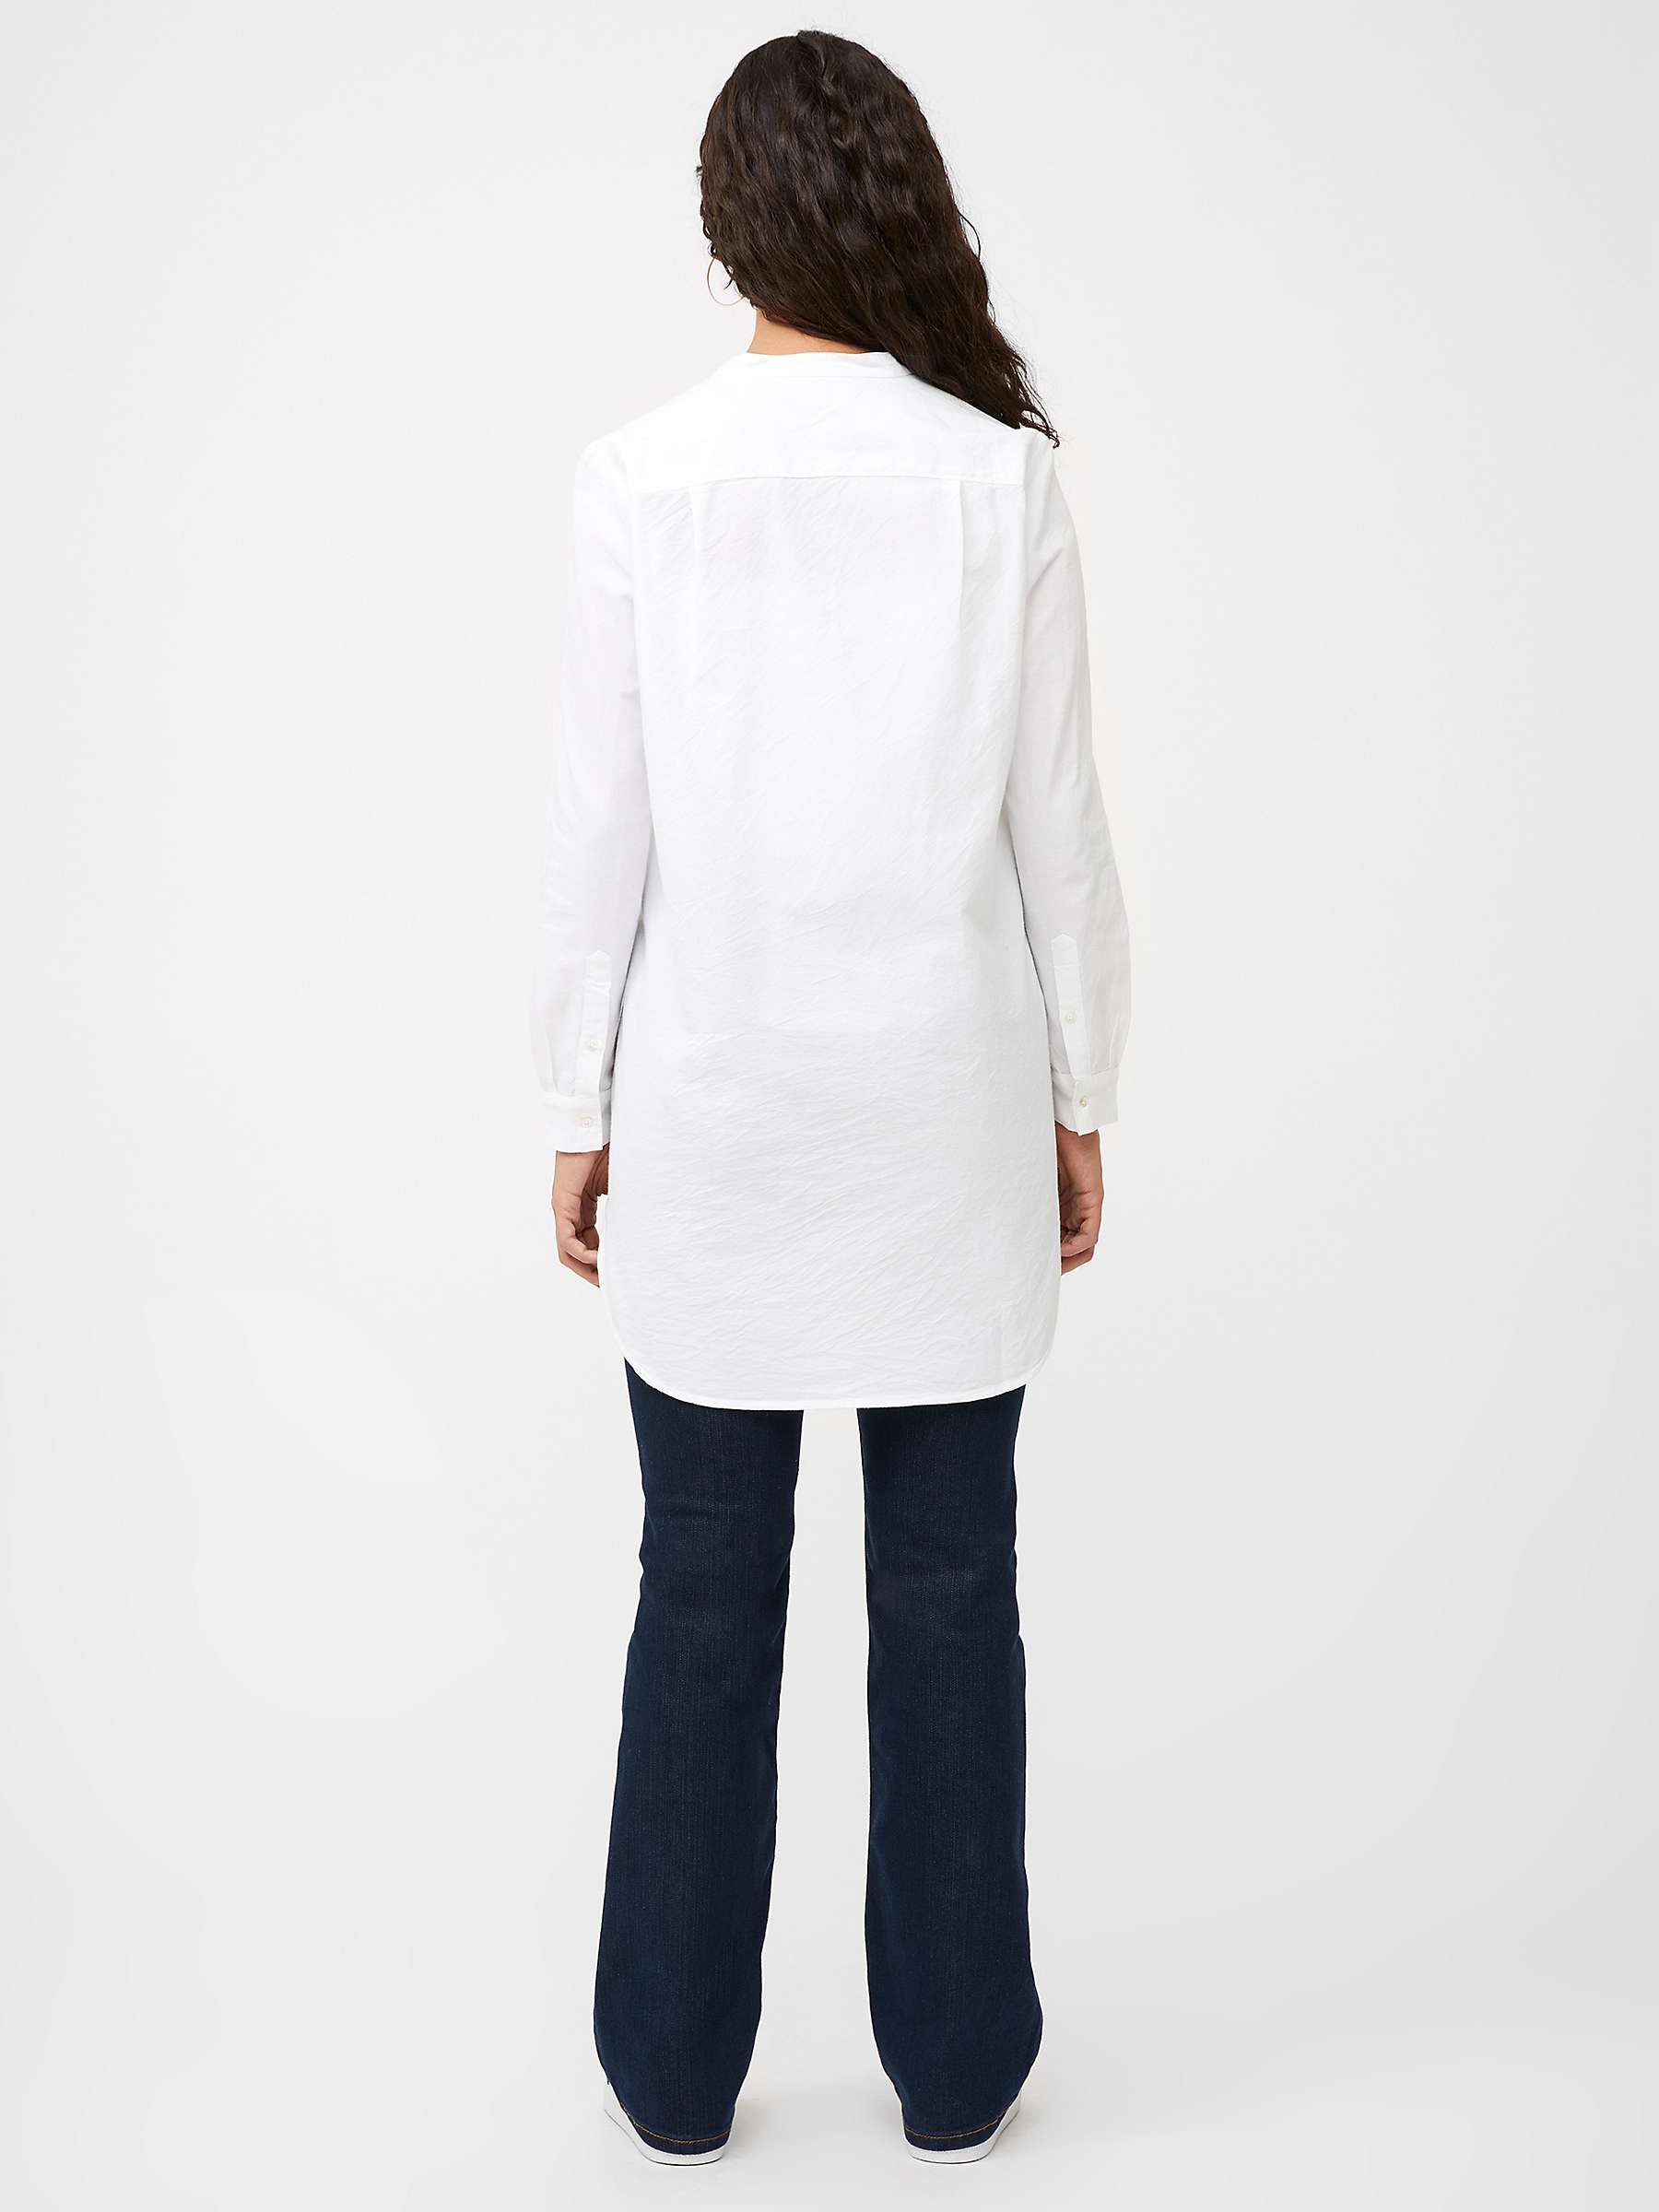 Buy Great Plains Core Oxford Longline Cotton Shirt, White Online at johnlewis.com